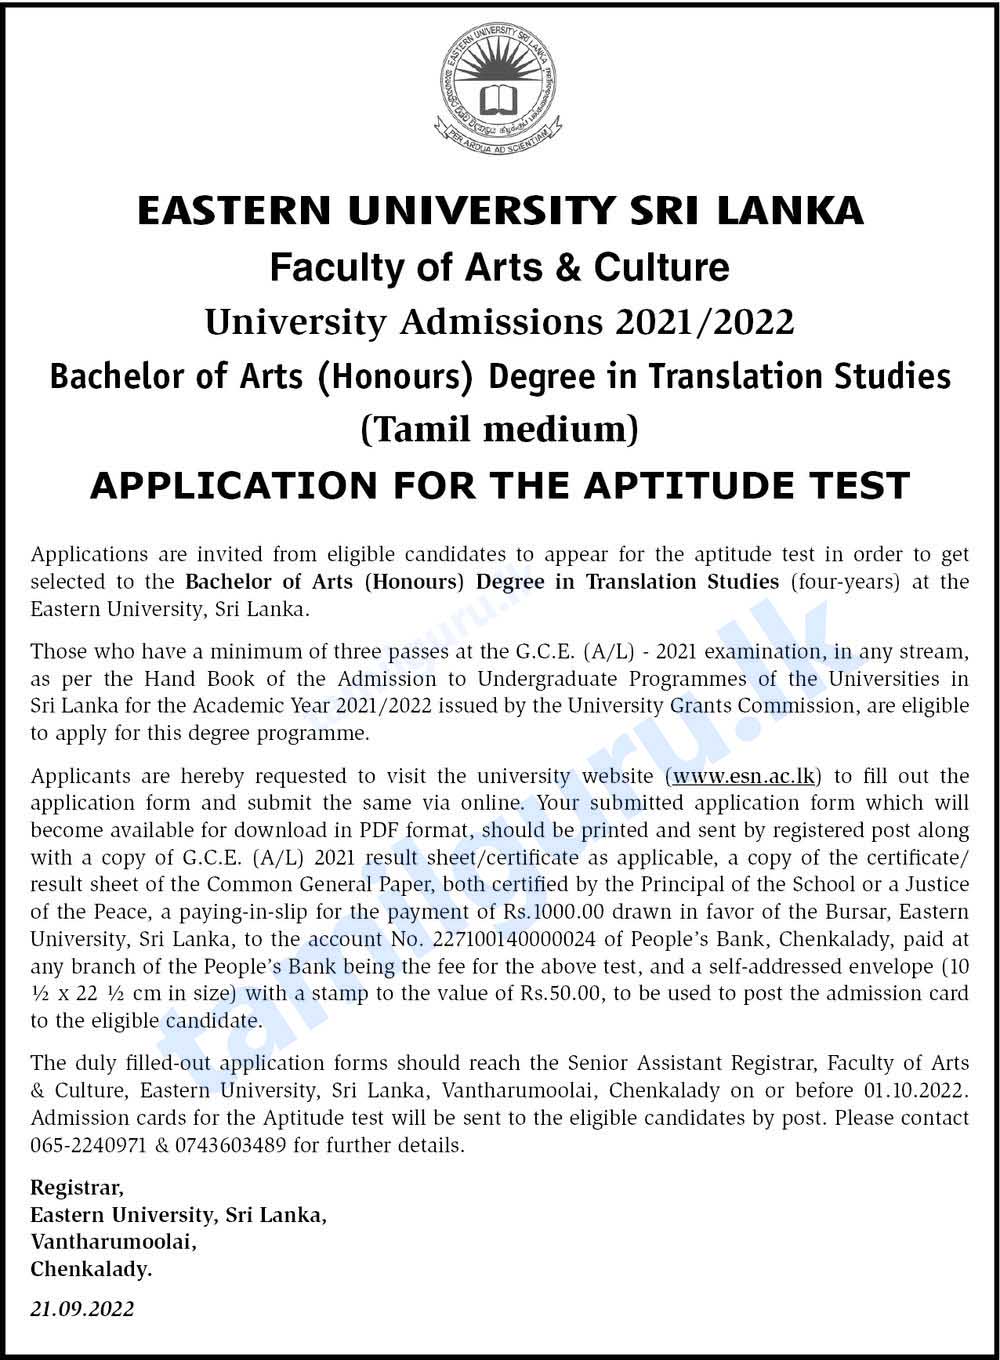 Eastern University Translation Studies Aptitude Test Application 2022